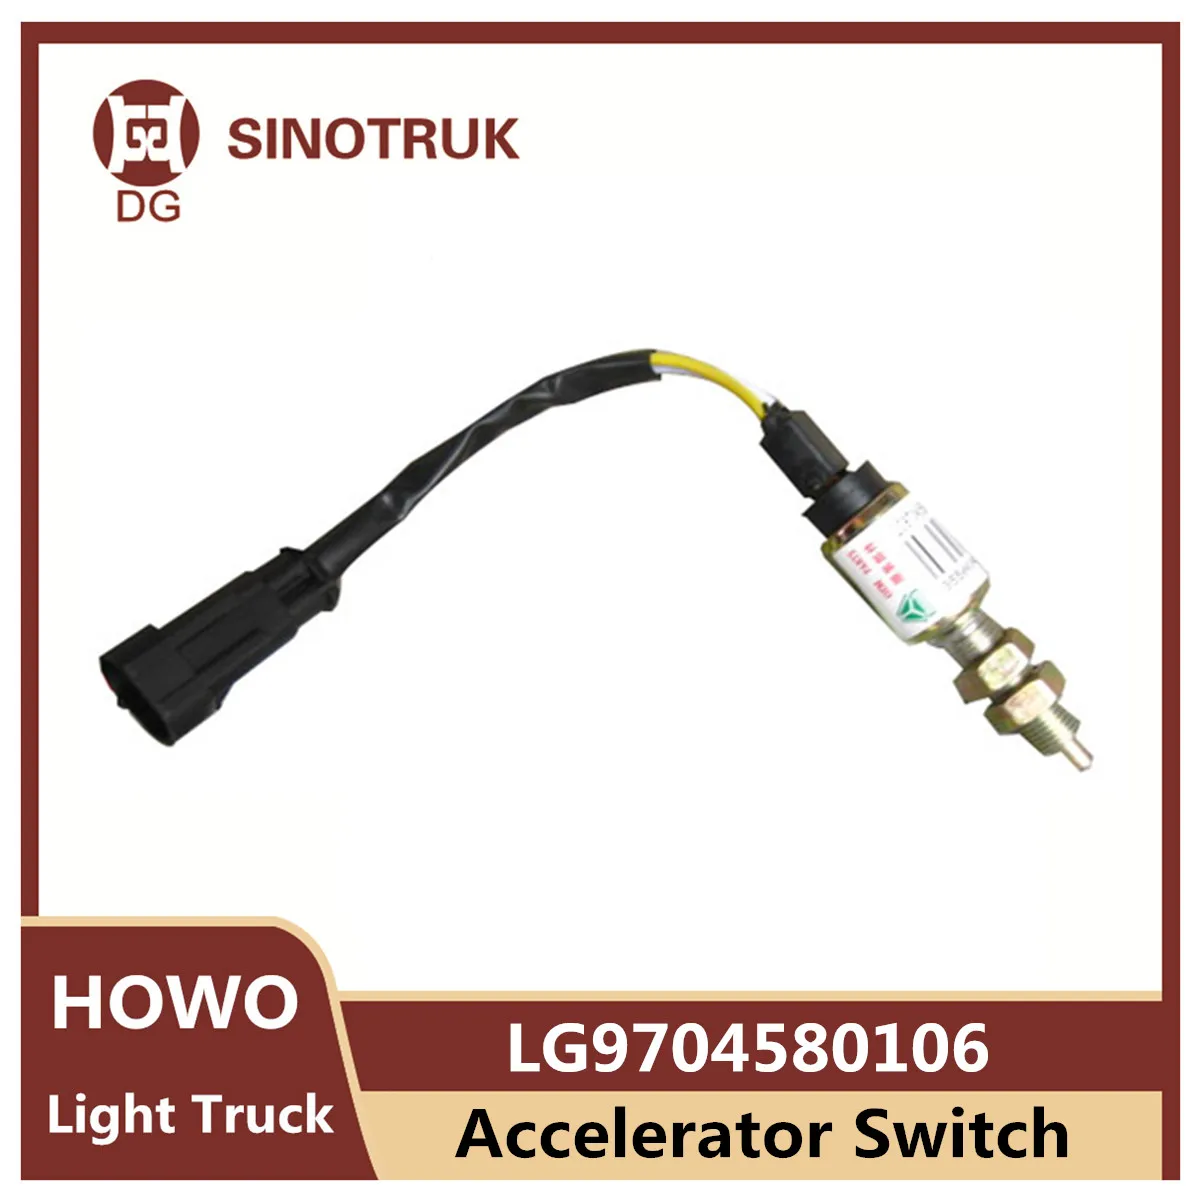 Accelerator Switch LG9704580106 for Sinotruk Howo Light Truck Clutch Switch Original Auto Truck Parts original sinotruk howo truck engine parts fuel injection pump vg1246080097